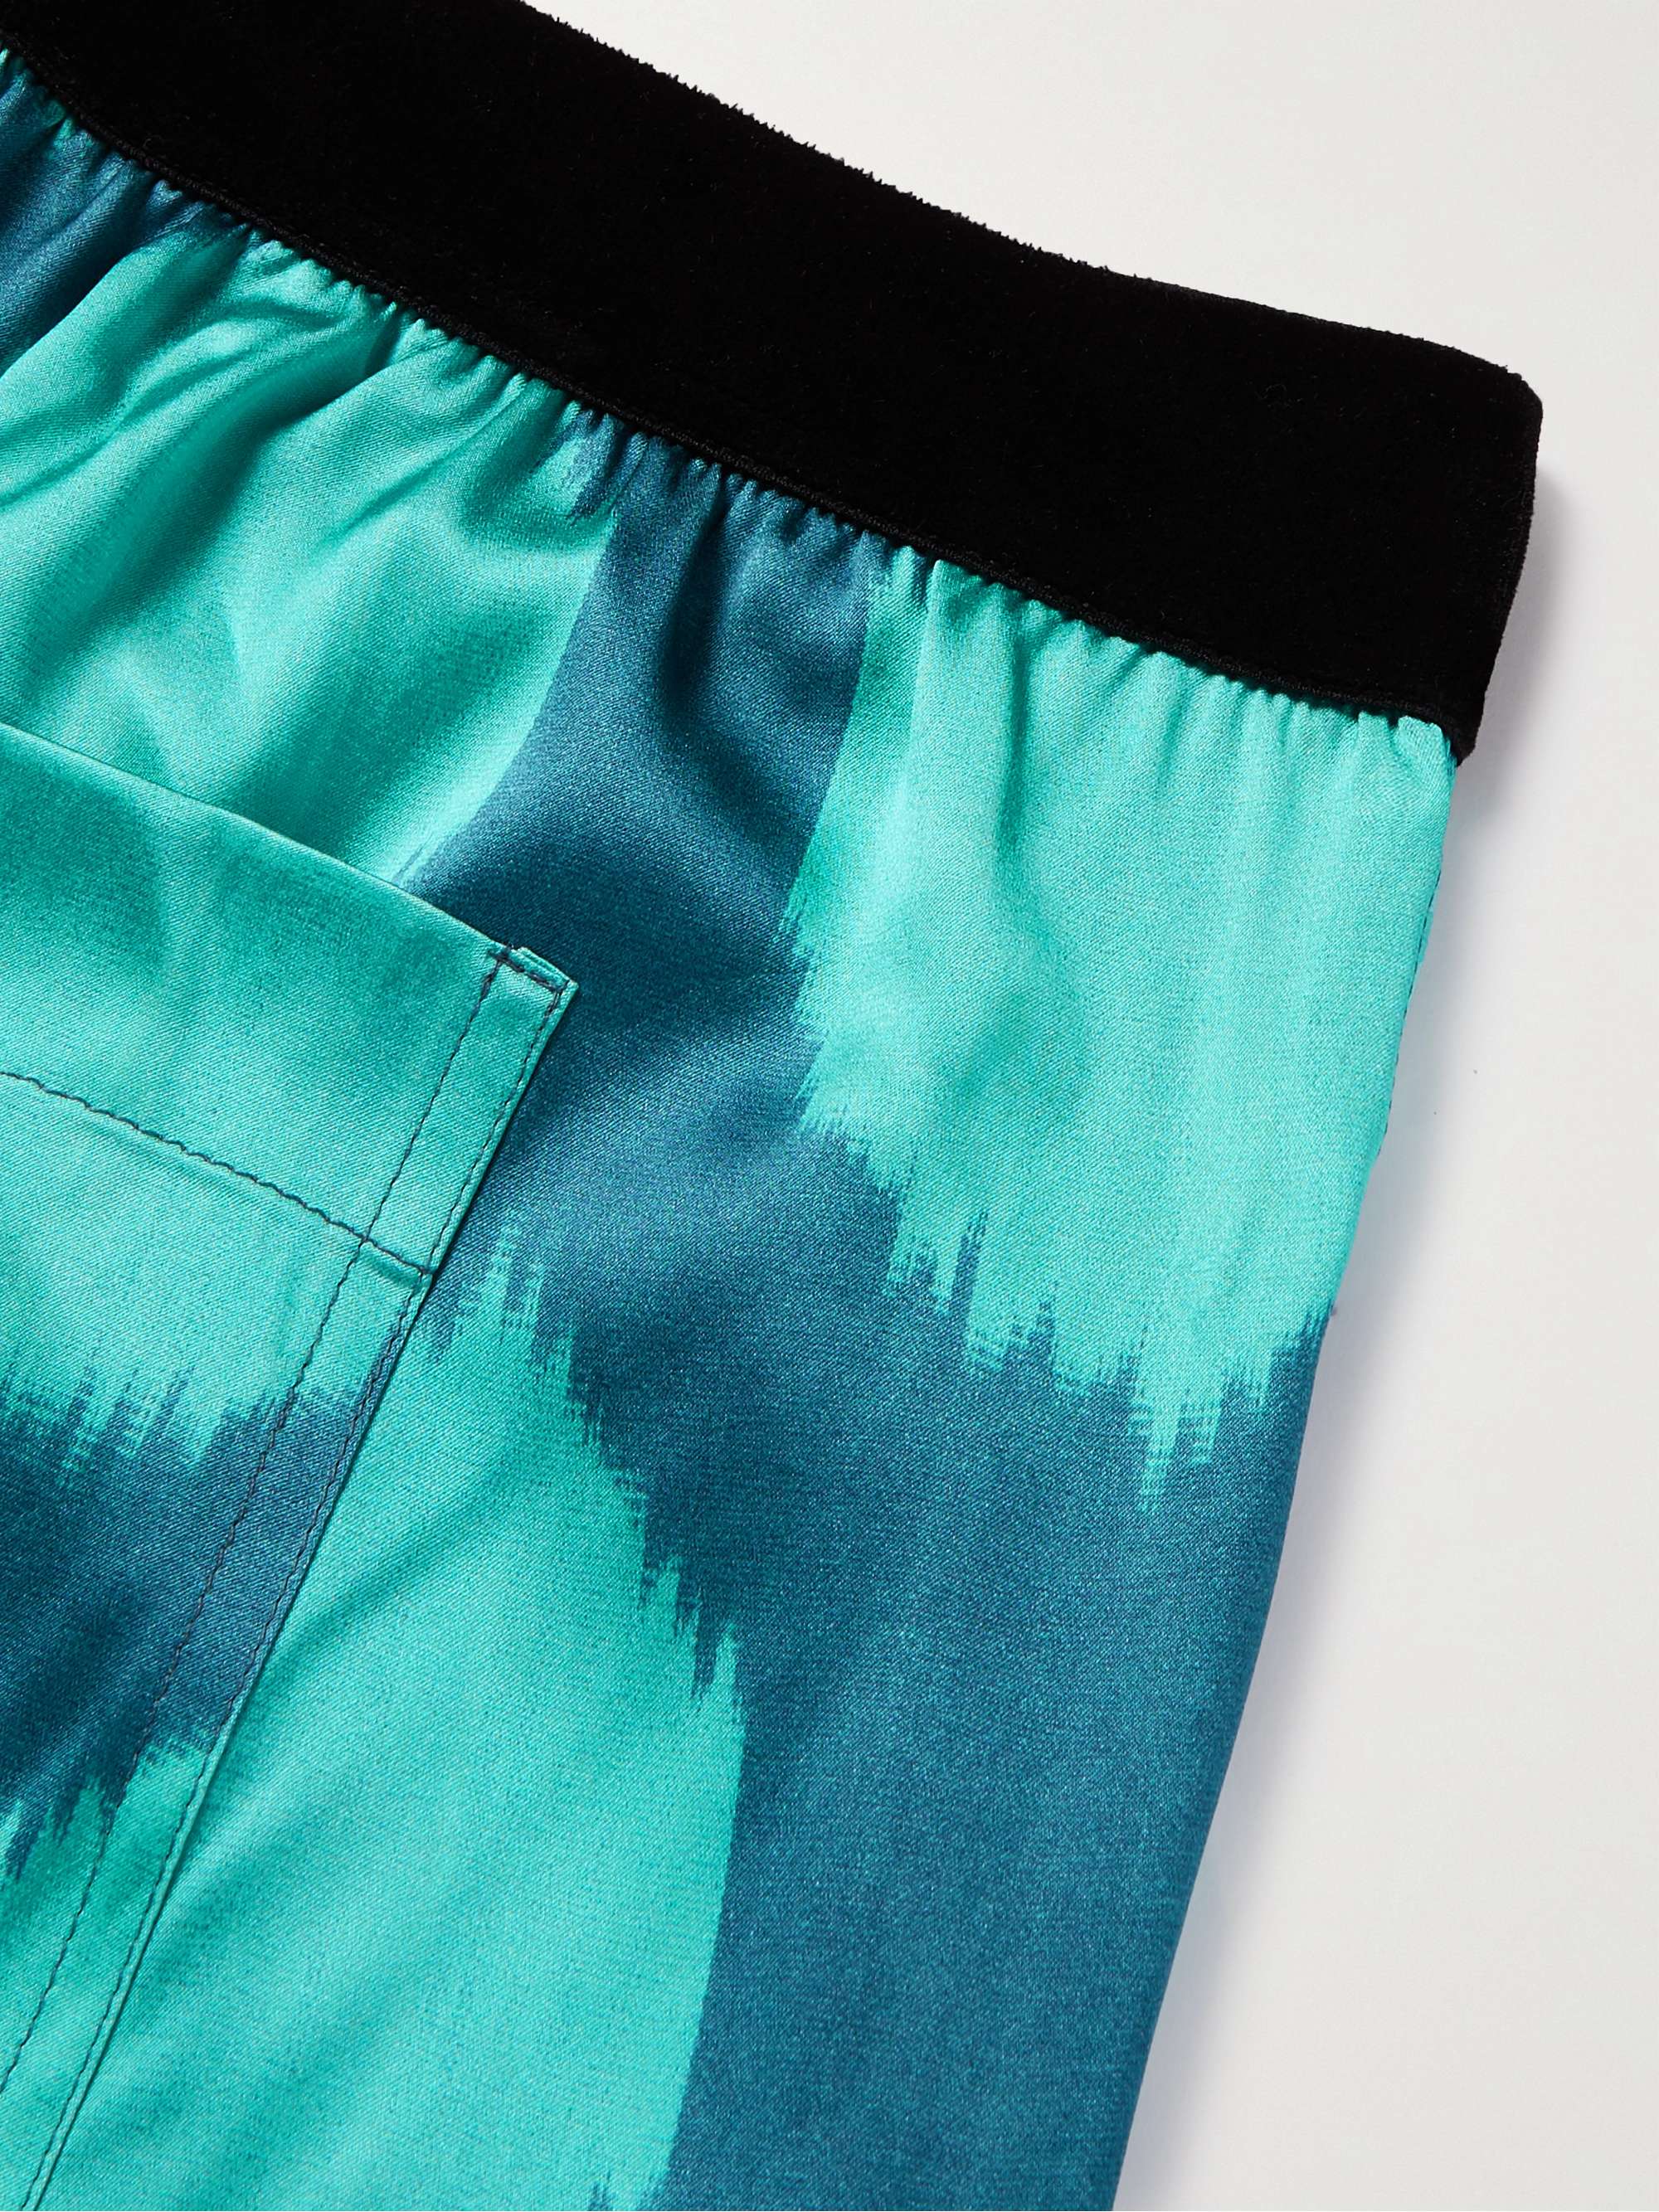 TOM FORD Velvet-Trimmed Printed Silk-Satin Pyjama Trousers